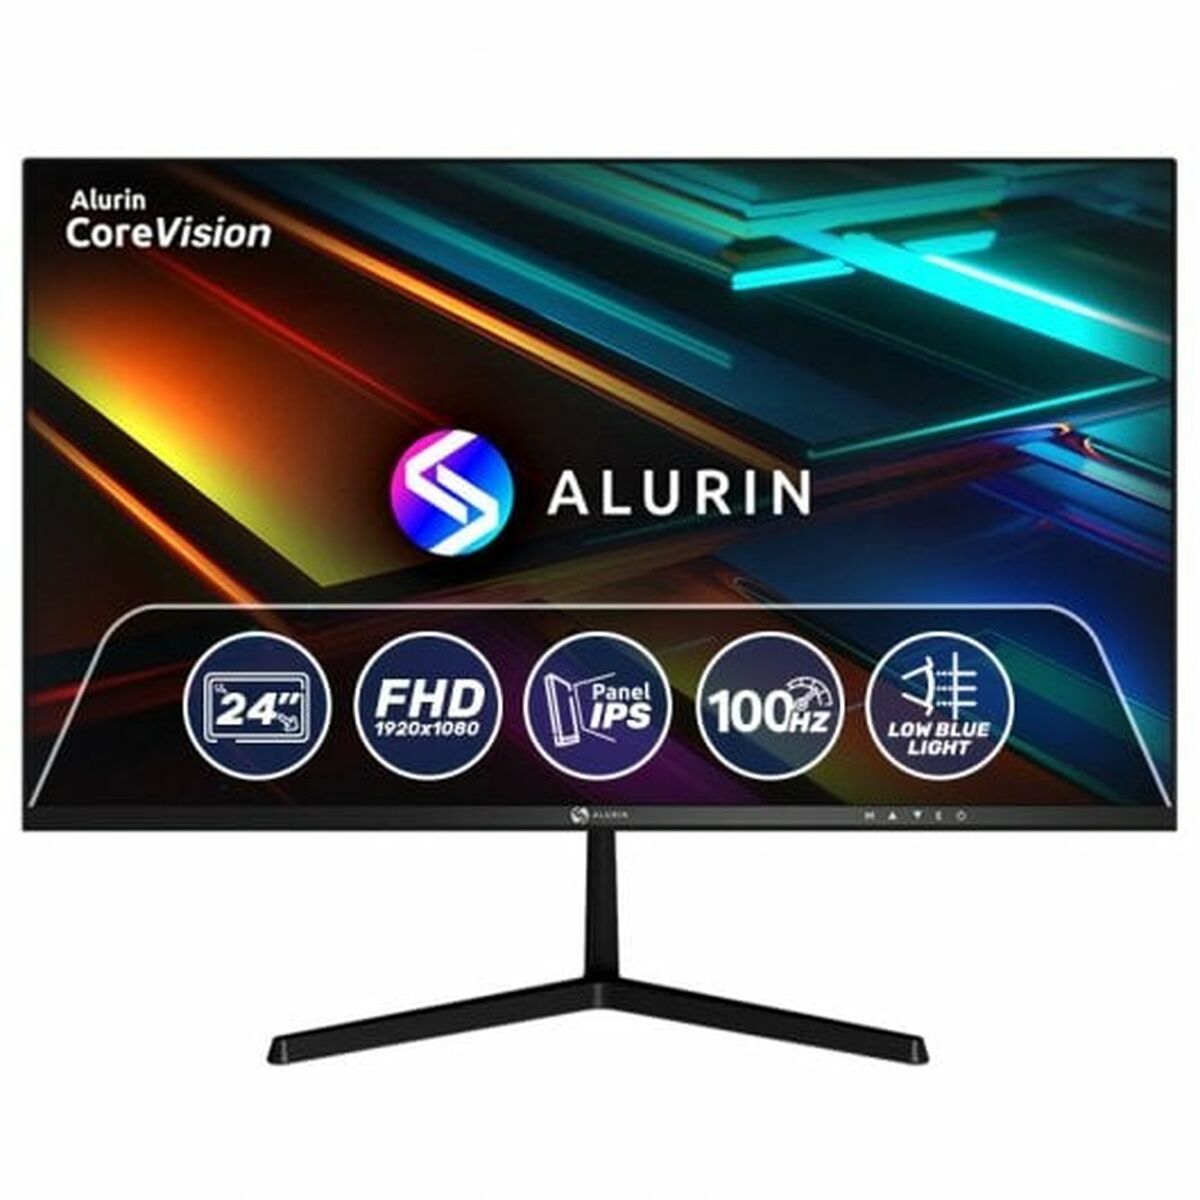 Écran Alurin CoreVision 100IPSLite Full HD 24